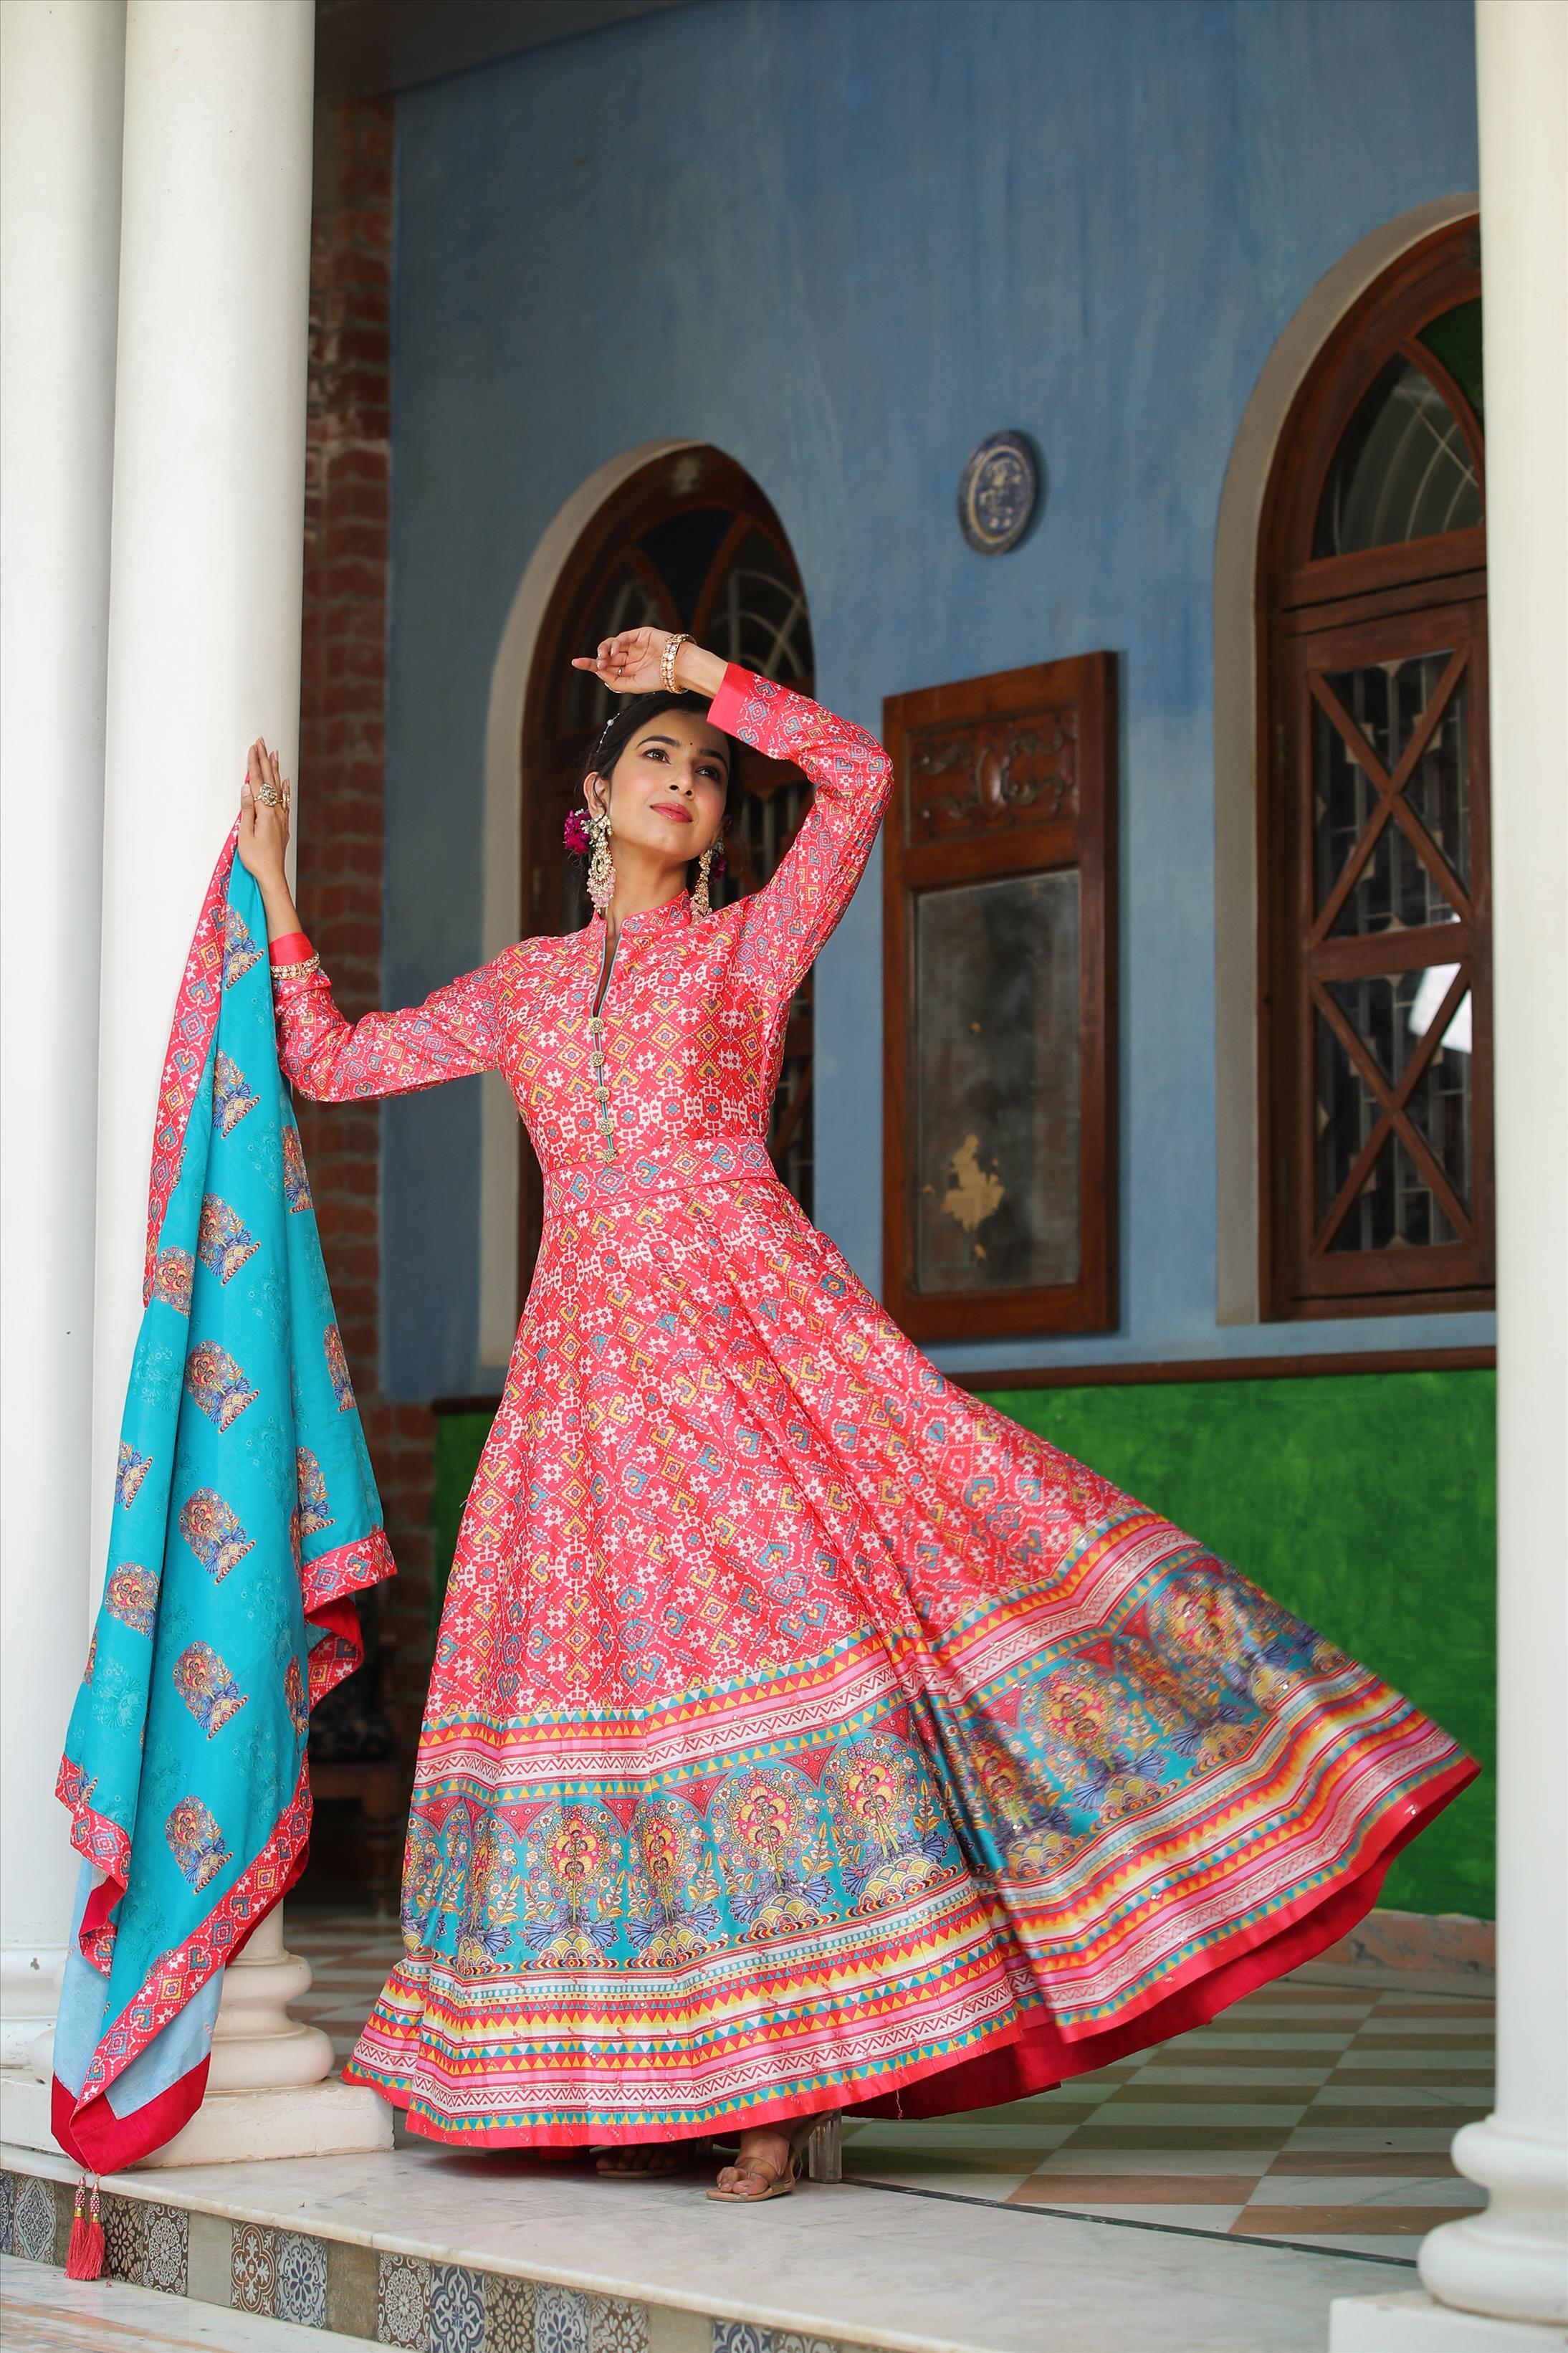 Net Satin - Anarkali Salwar Kameez - Indian Dress - C1027C | Fabricoz USA